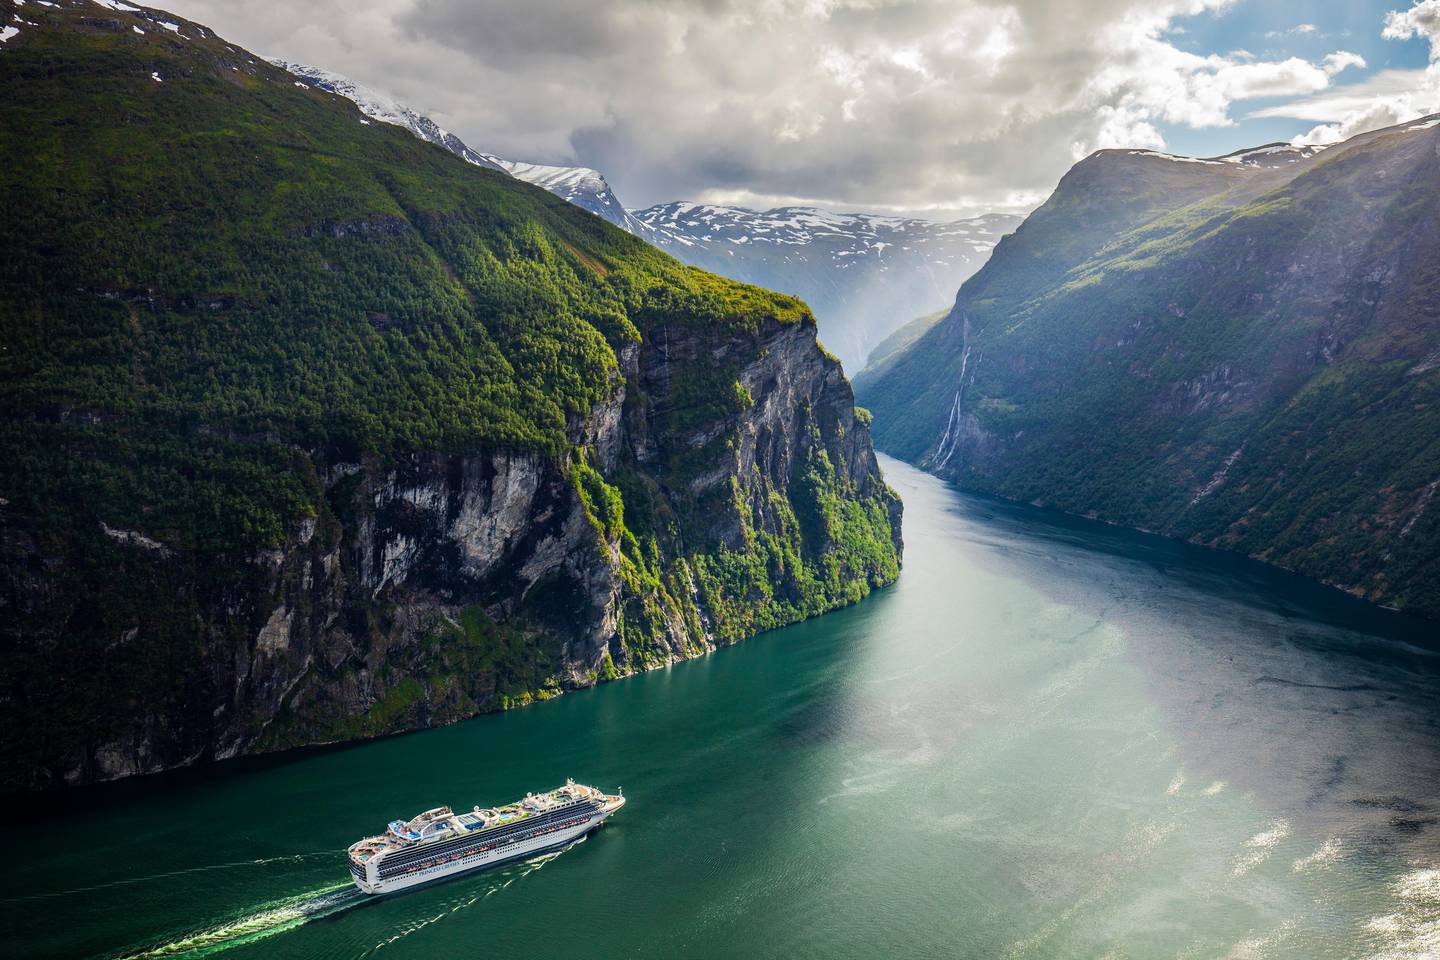 Geiranger 20180620
Cruiseskipet Sapphire Princess, eid av Princess Cruises, på vei ut Geirangerfjorden i Møre og Romsdal.
Foto: Halvard Alvik, NTB scanpix